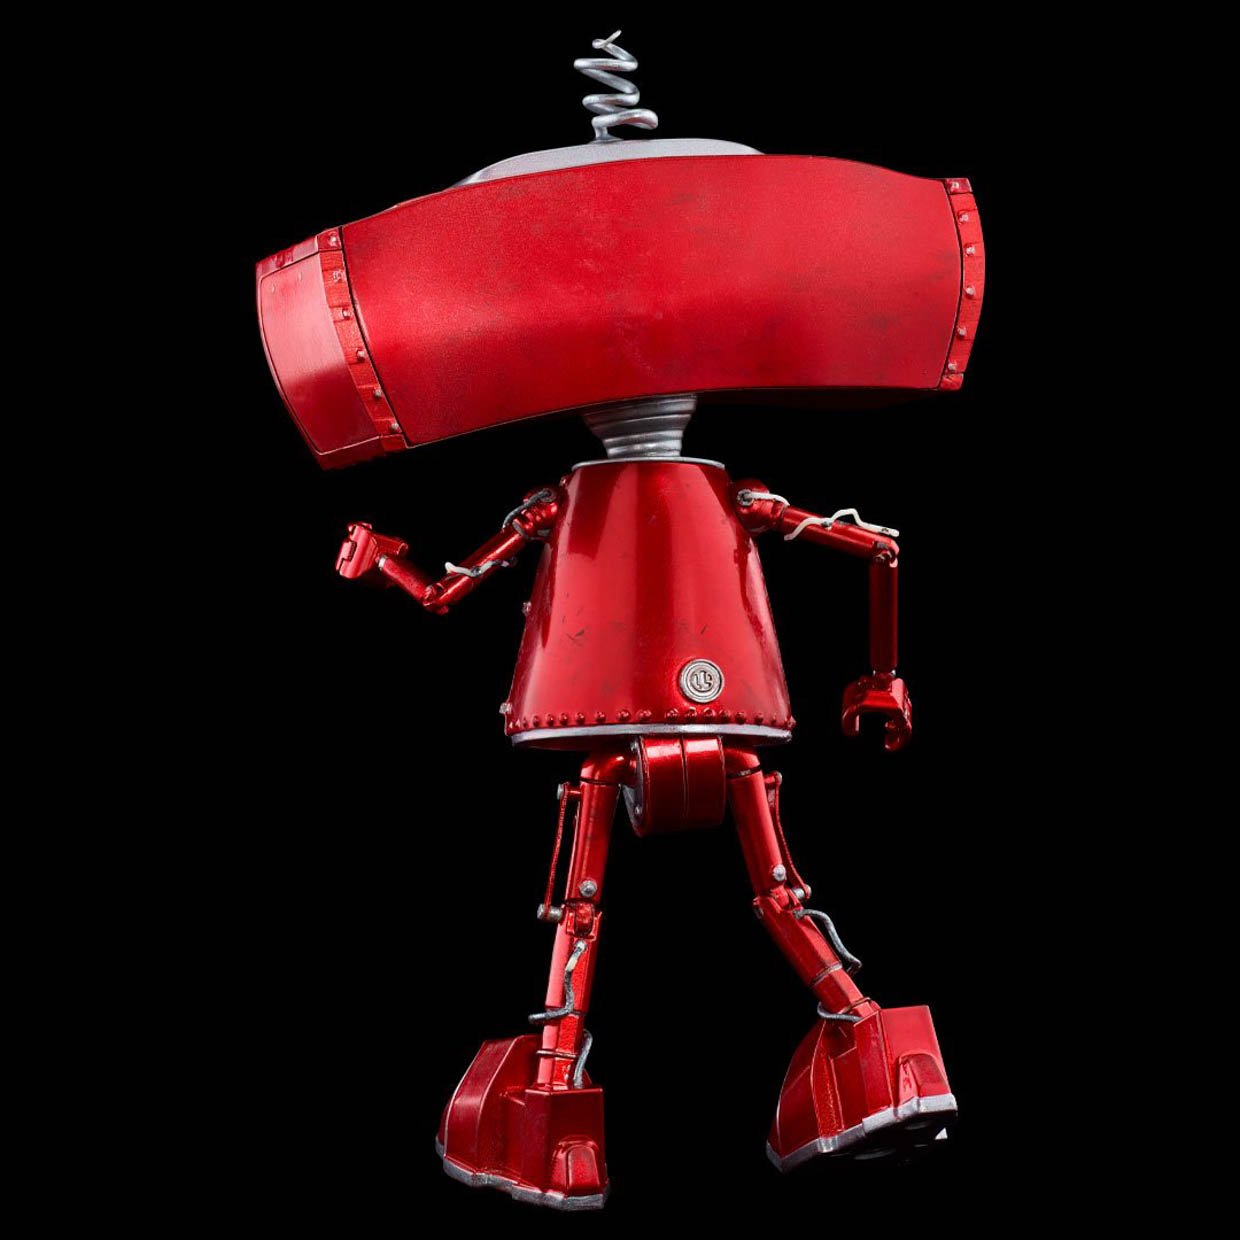 Mattel Creations Bad Robot Action Figure